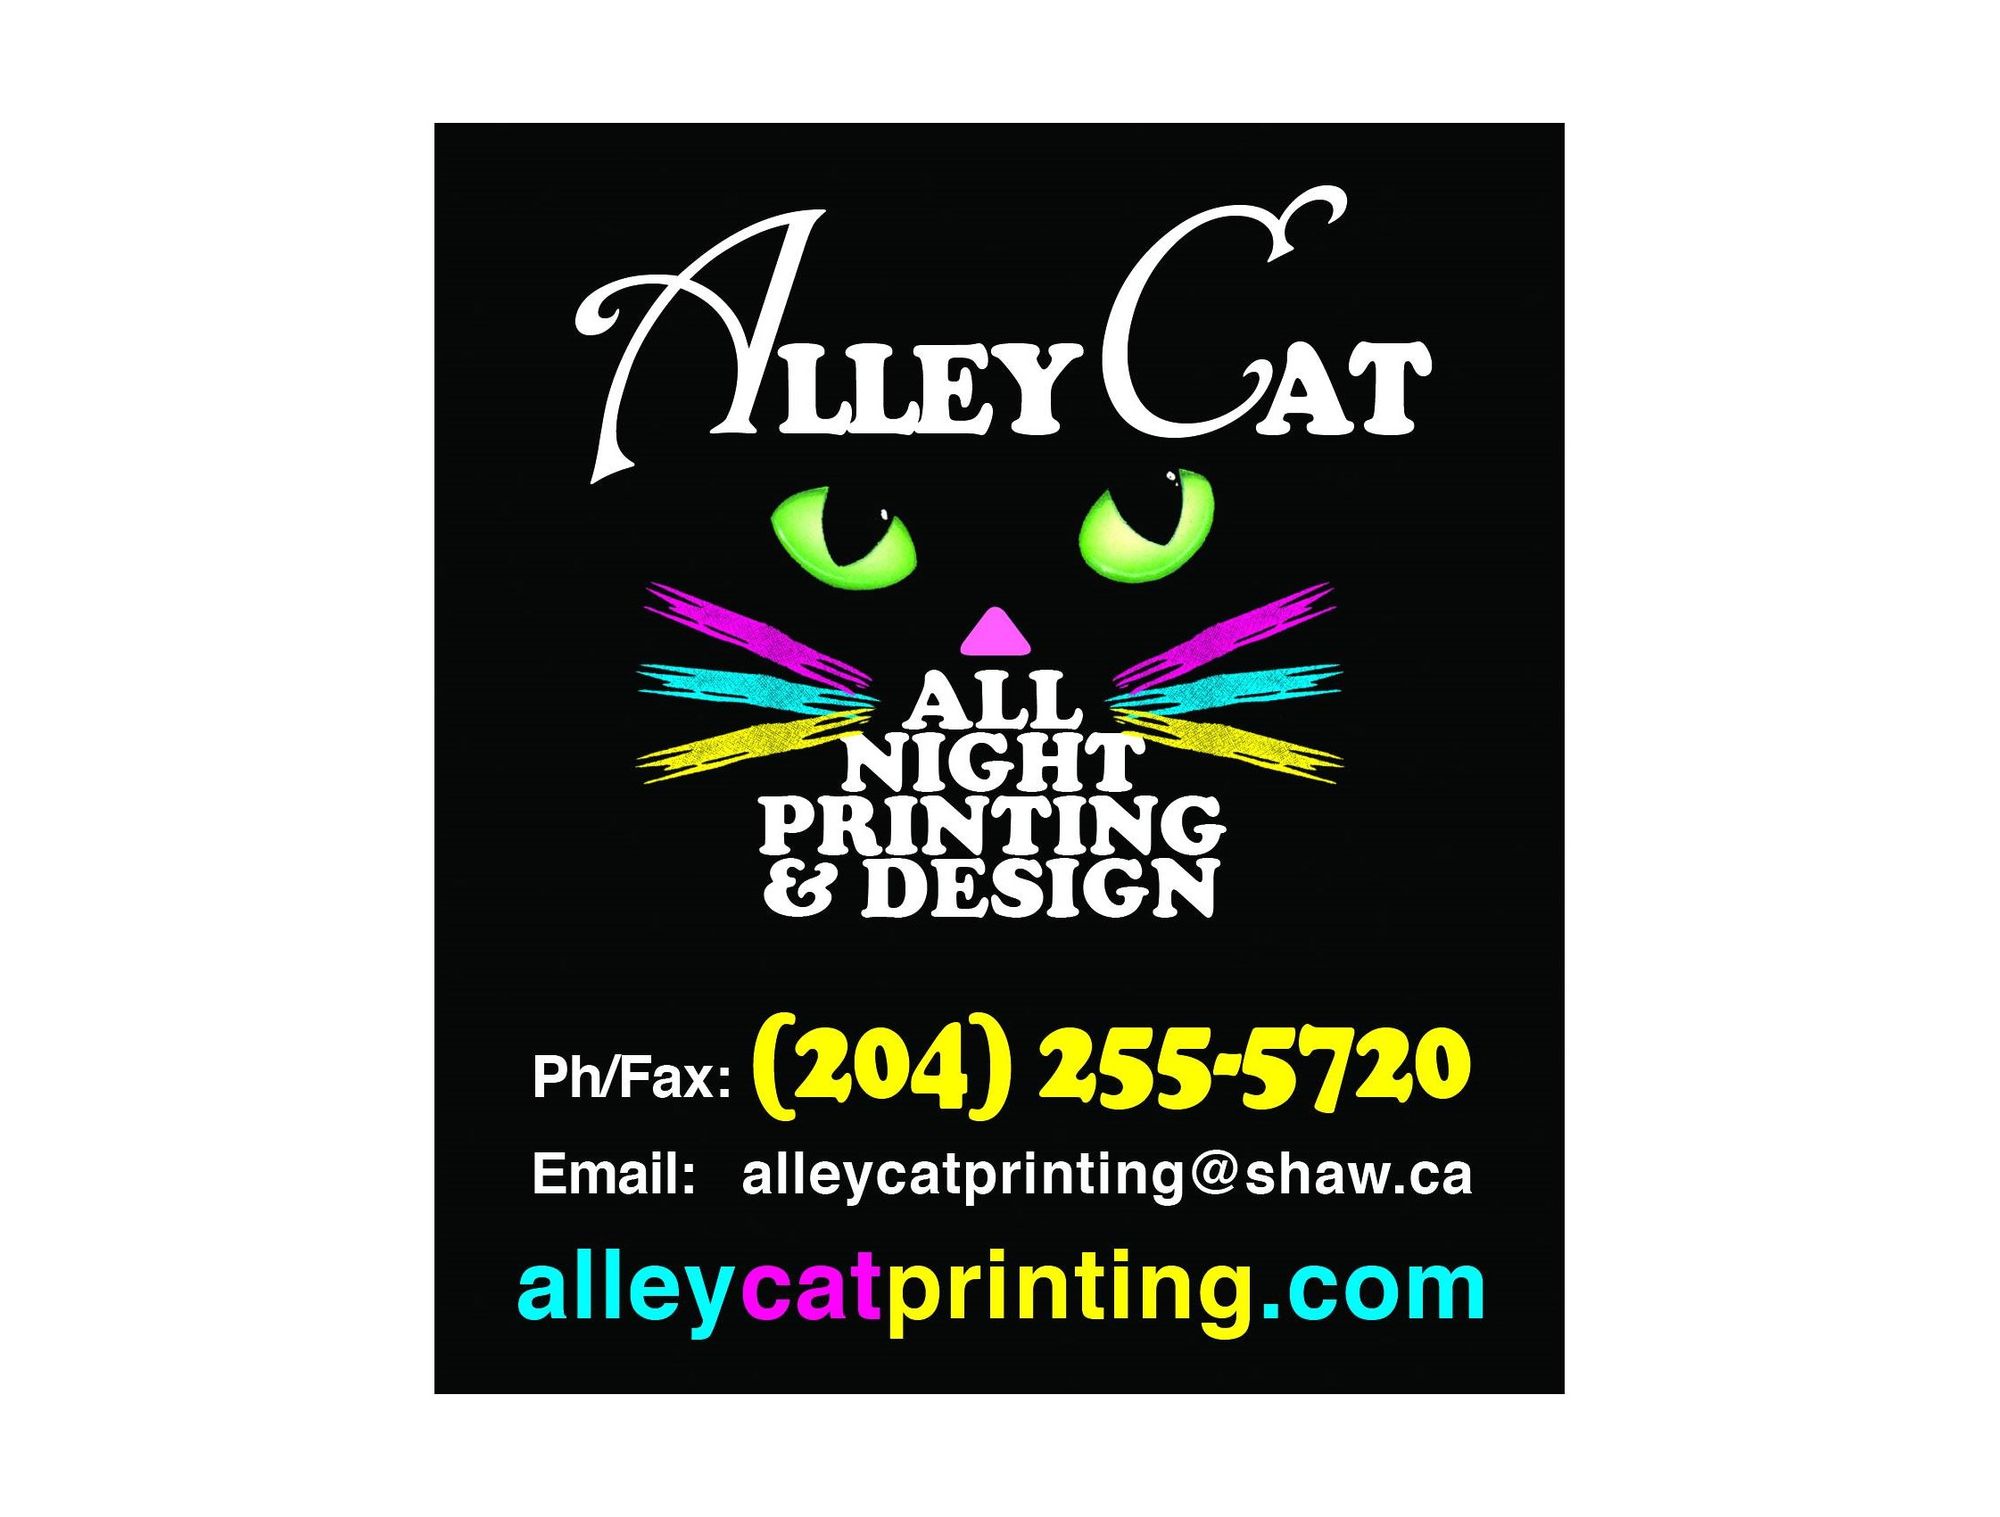 Alley Cat All Night Printing & Design - Kim Palmer